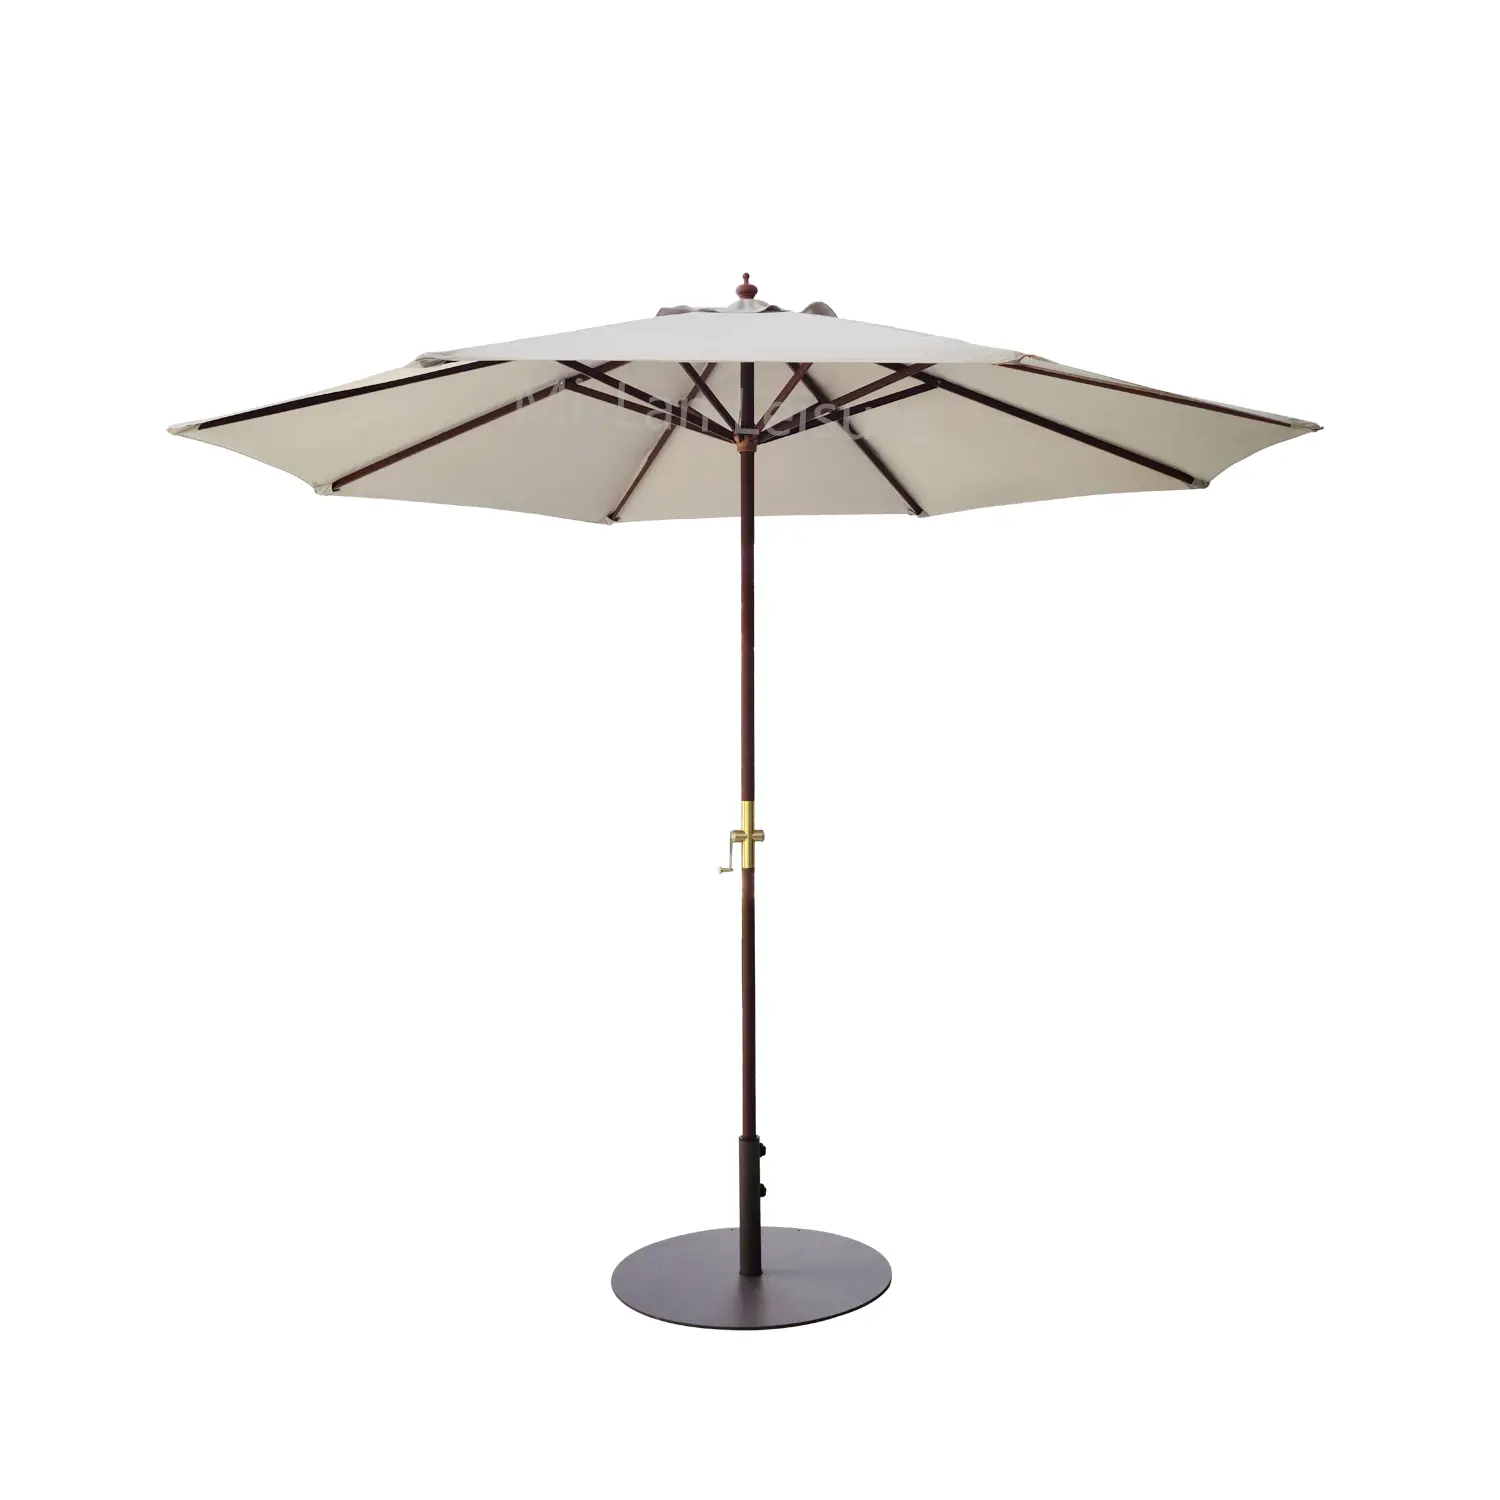 Guarda-chuva de madeira grande, venda quente de guarda-chuva de 3m para pátio 2021